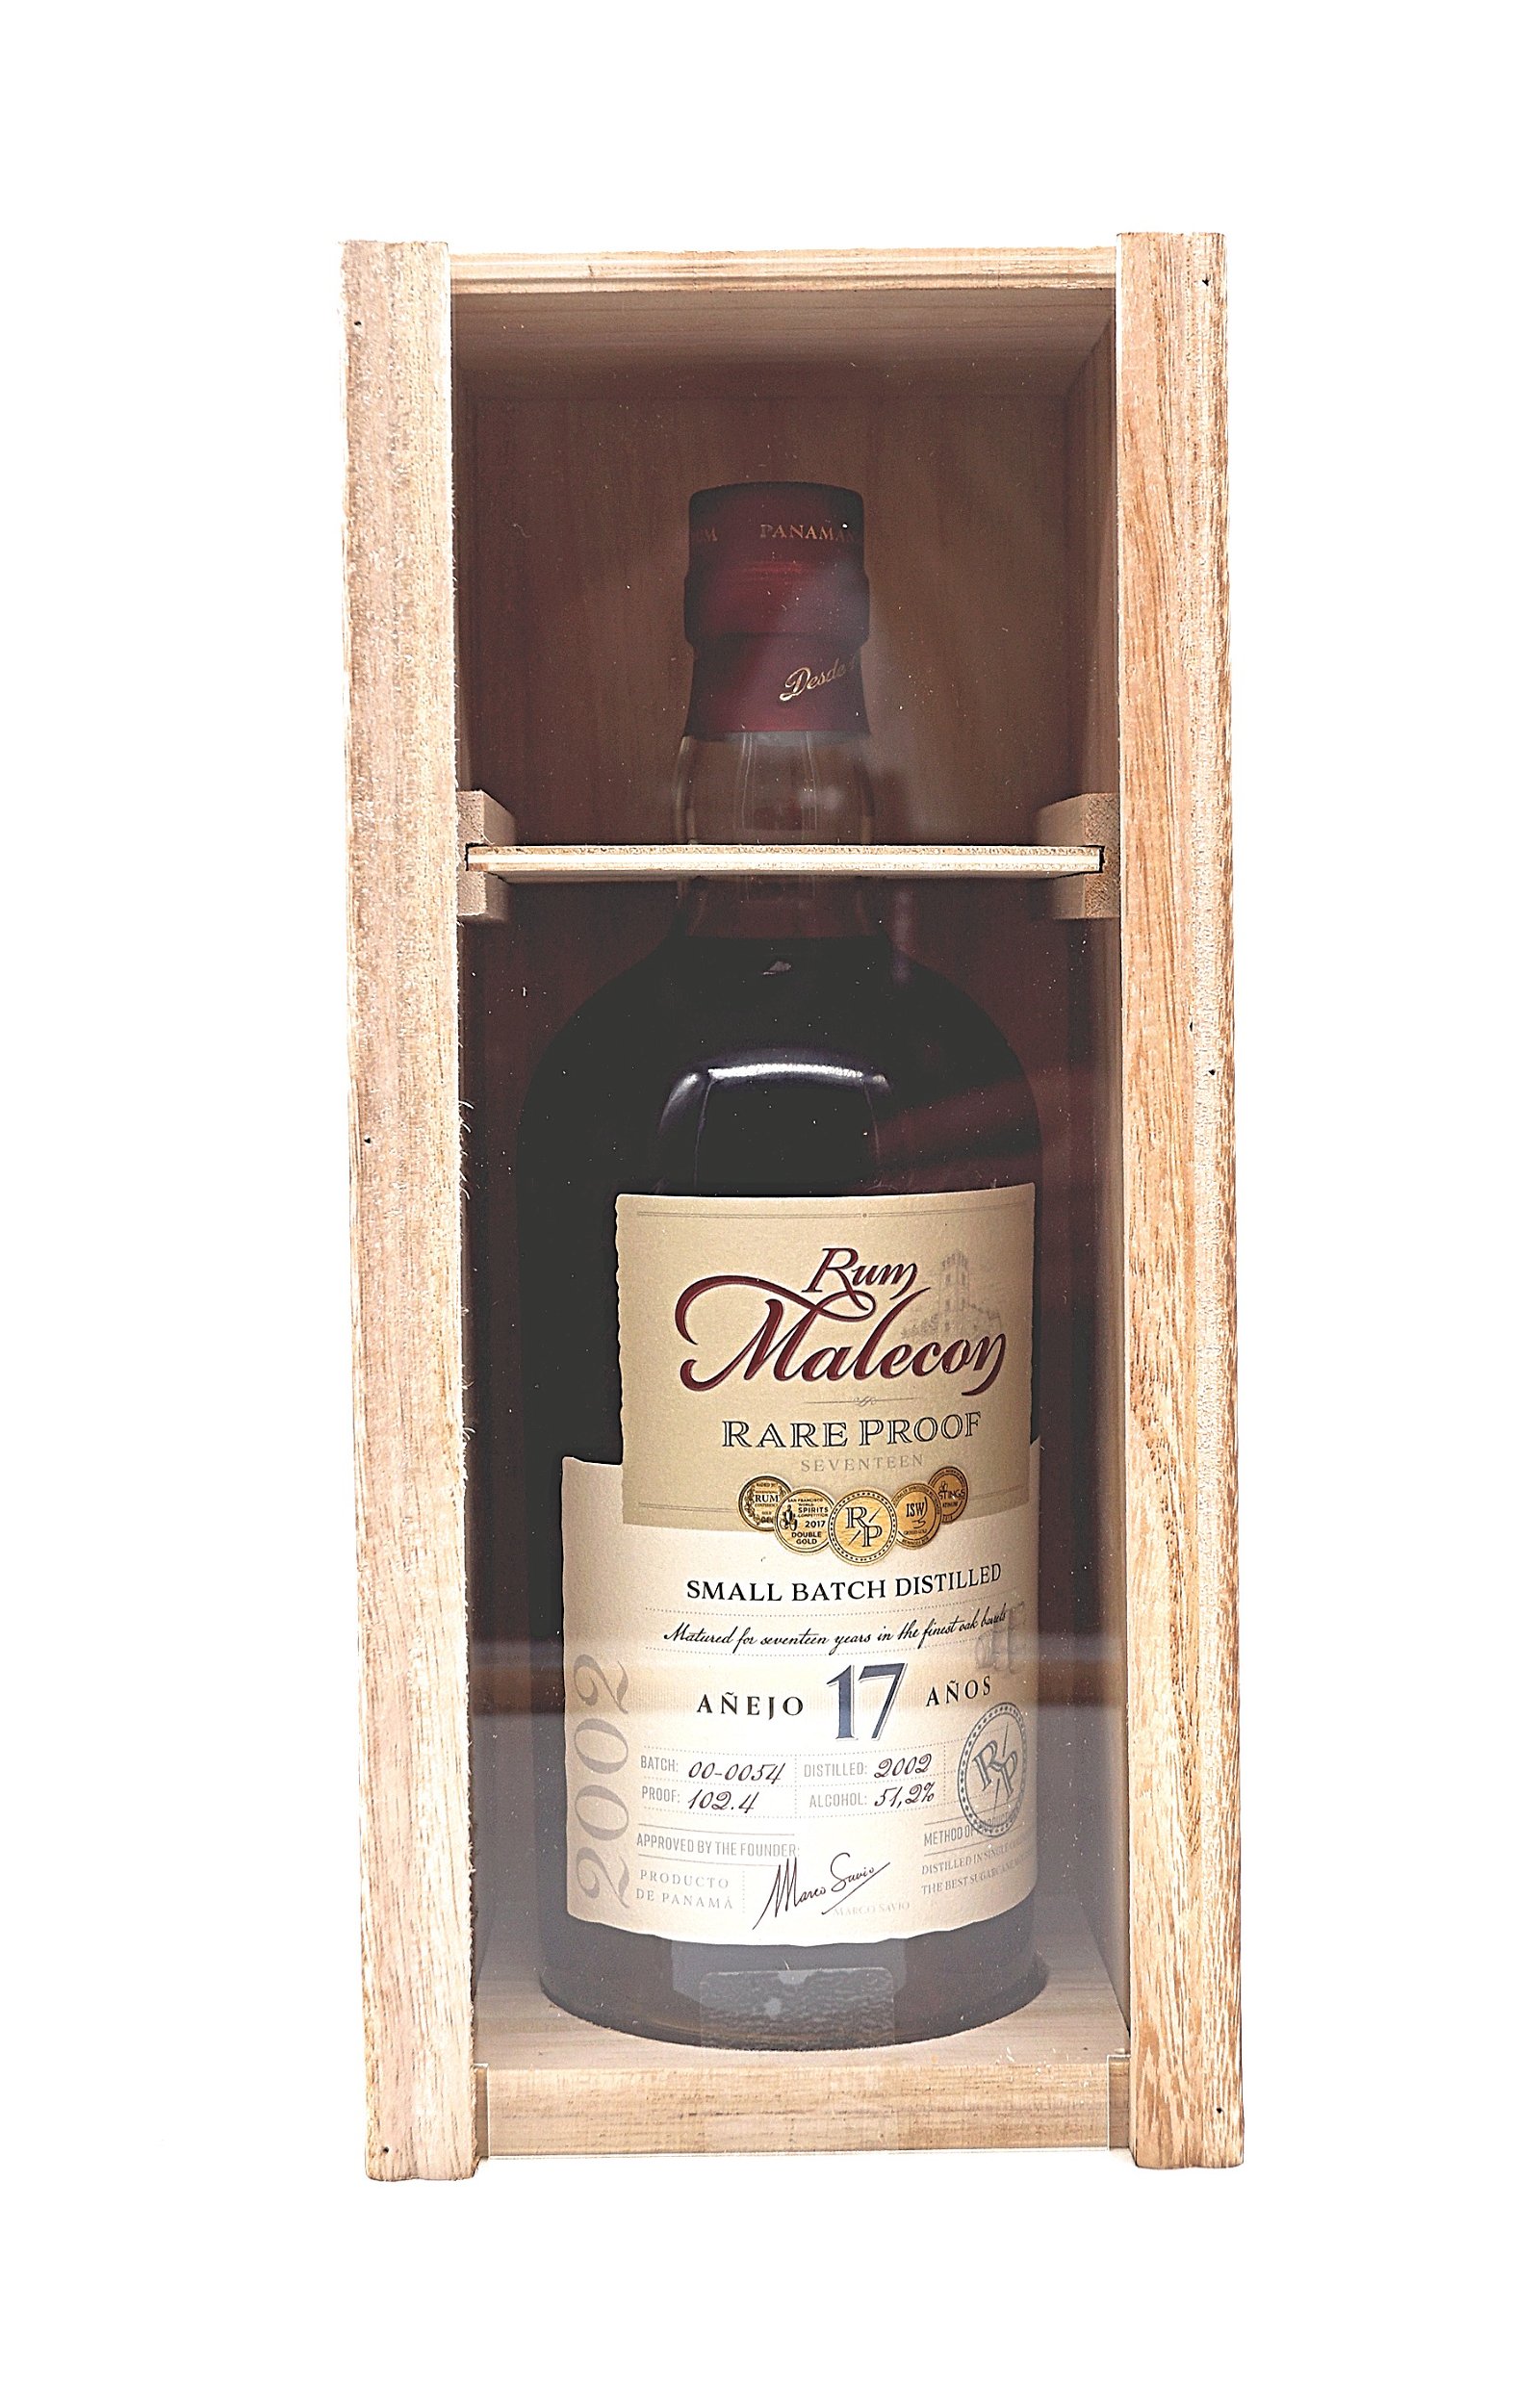 Rum Malecon 17 Jahre Rare Proof Small Batch Distilled